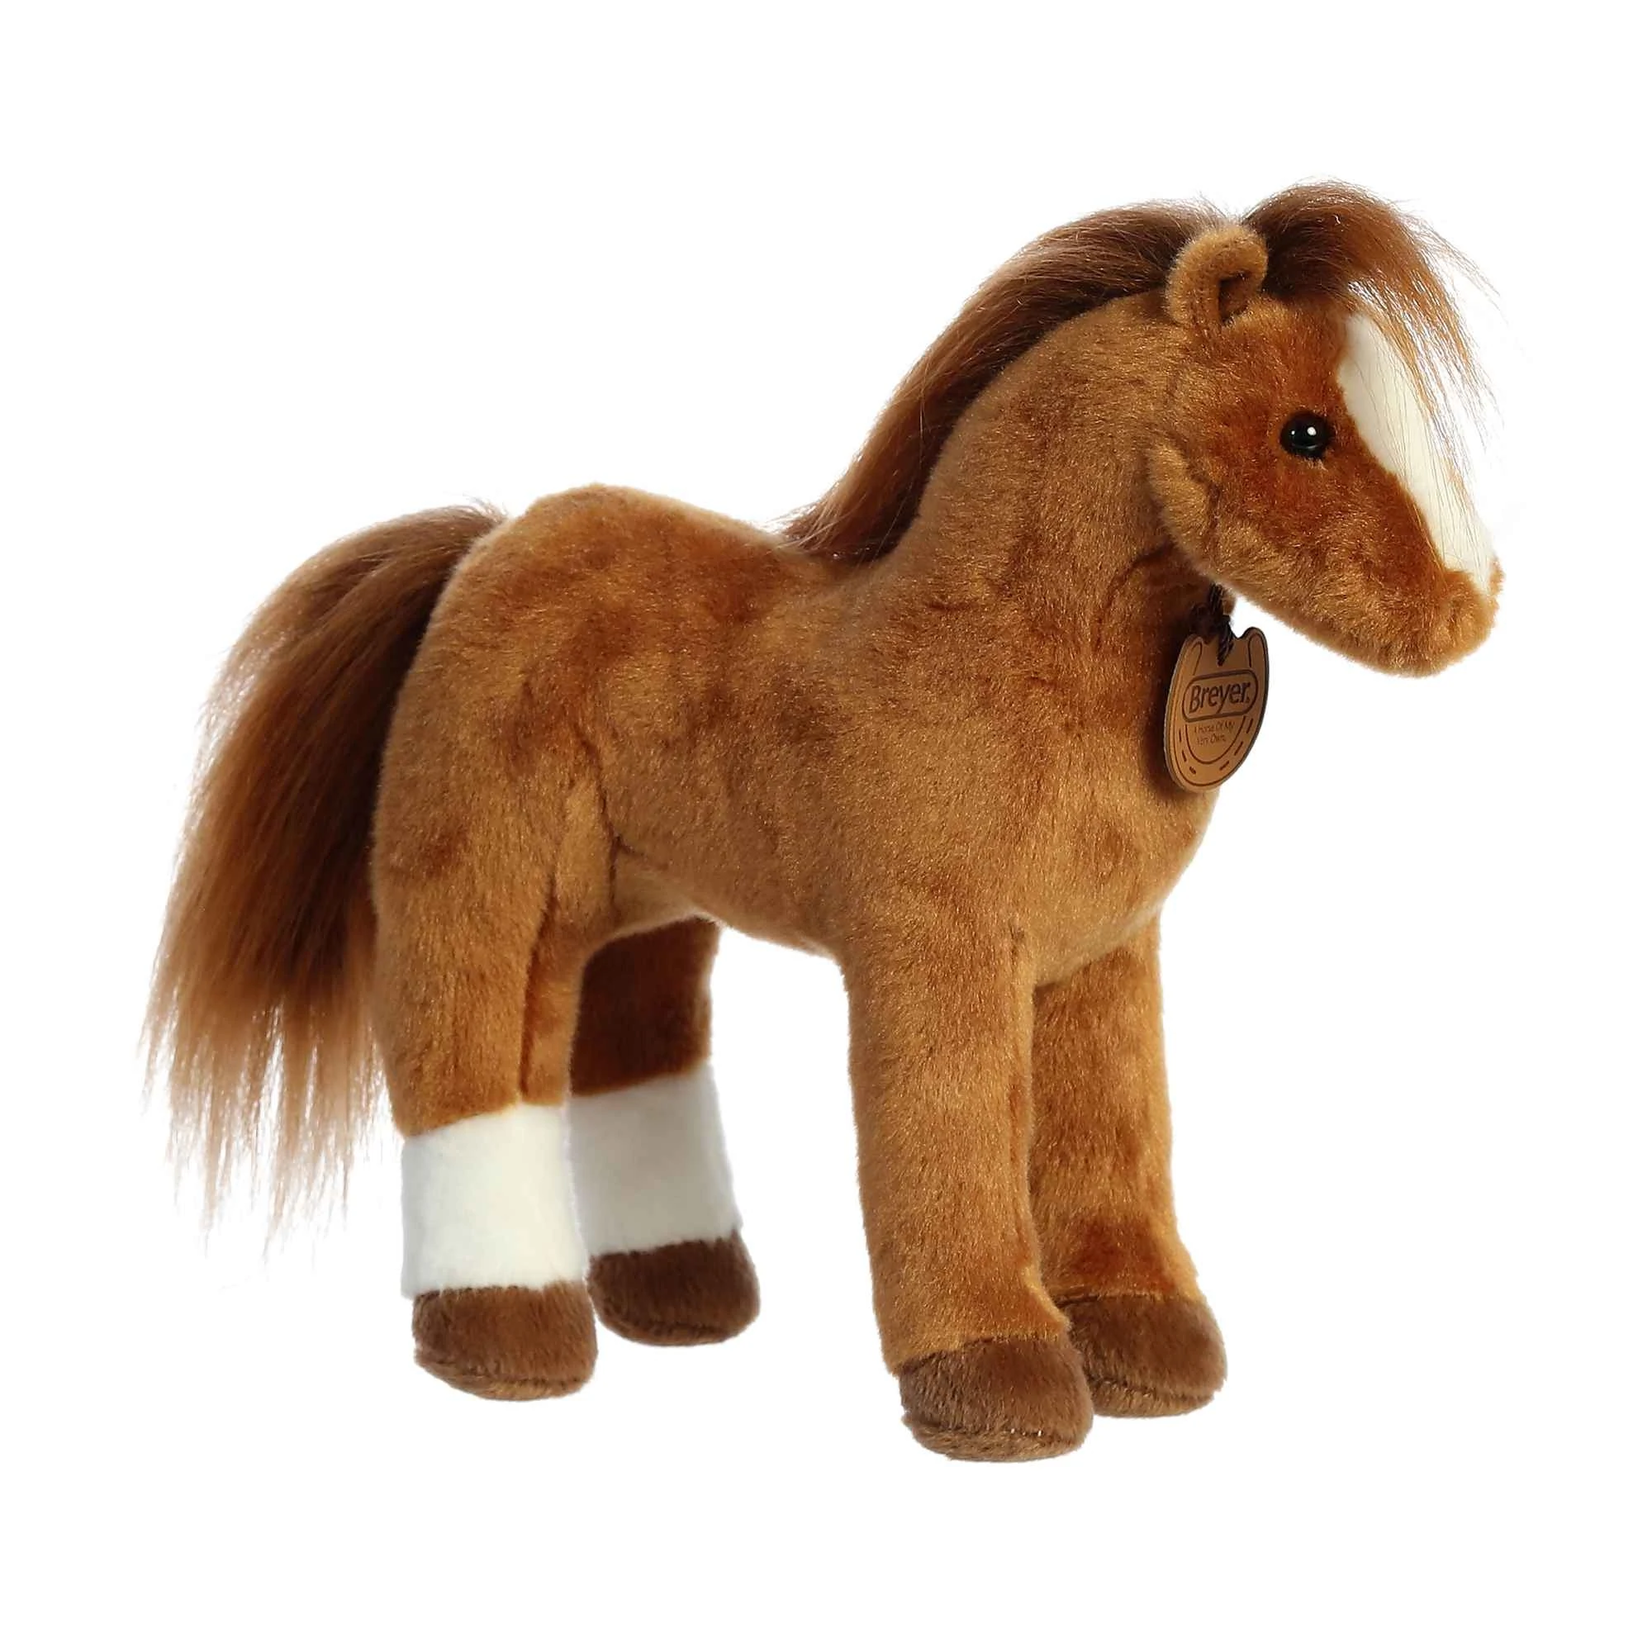 13" Breyer Plush Horse in Corral